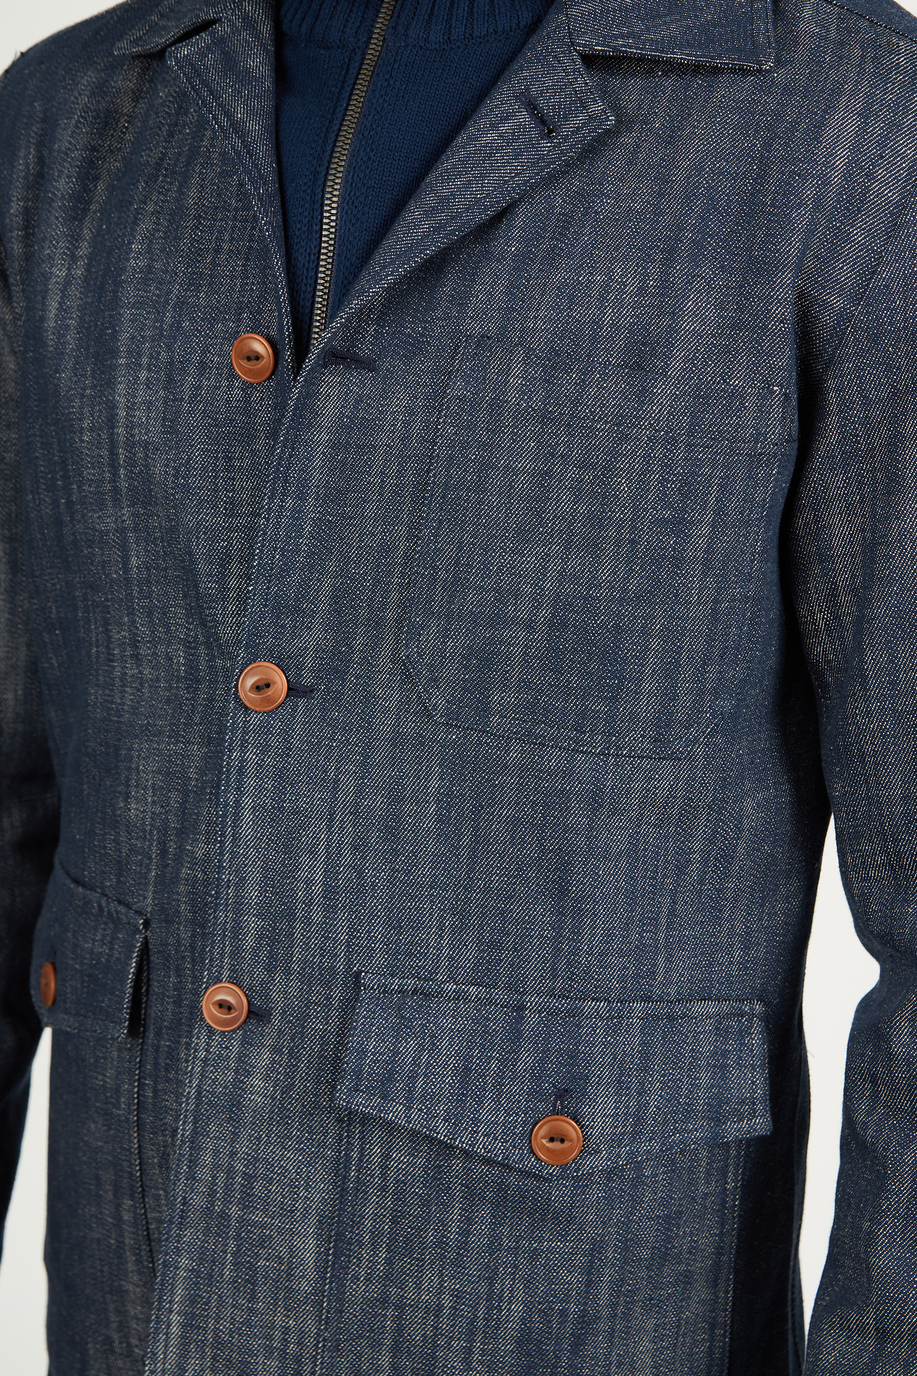 Men's Sahariana jacket in 100% cotton, regular fit model